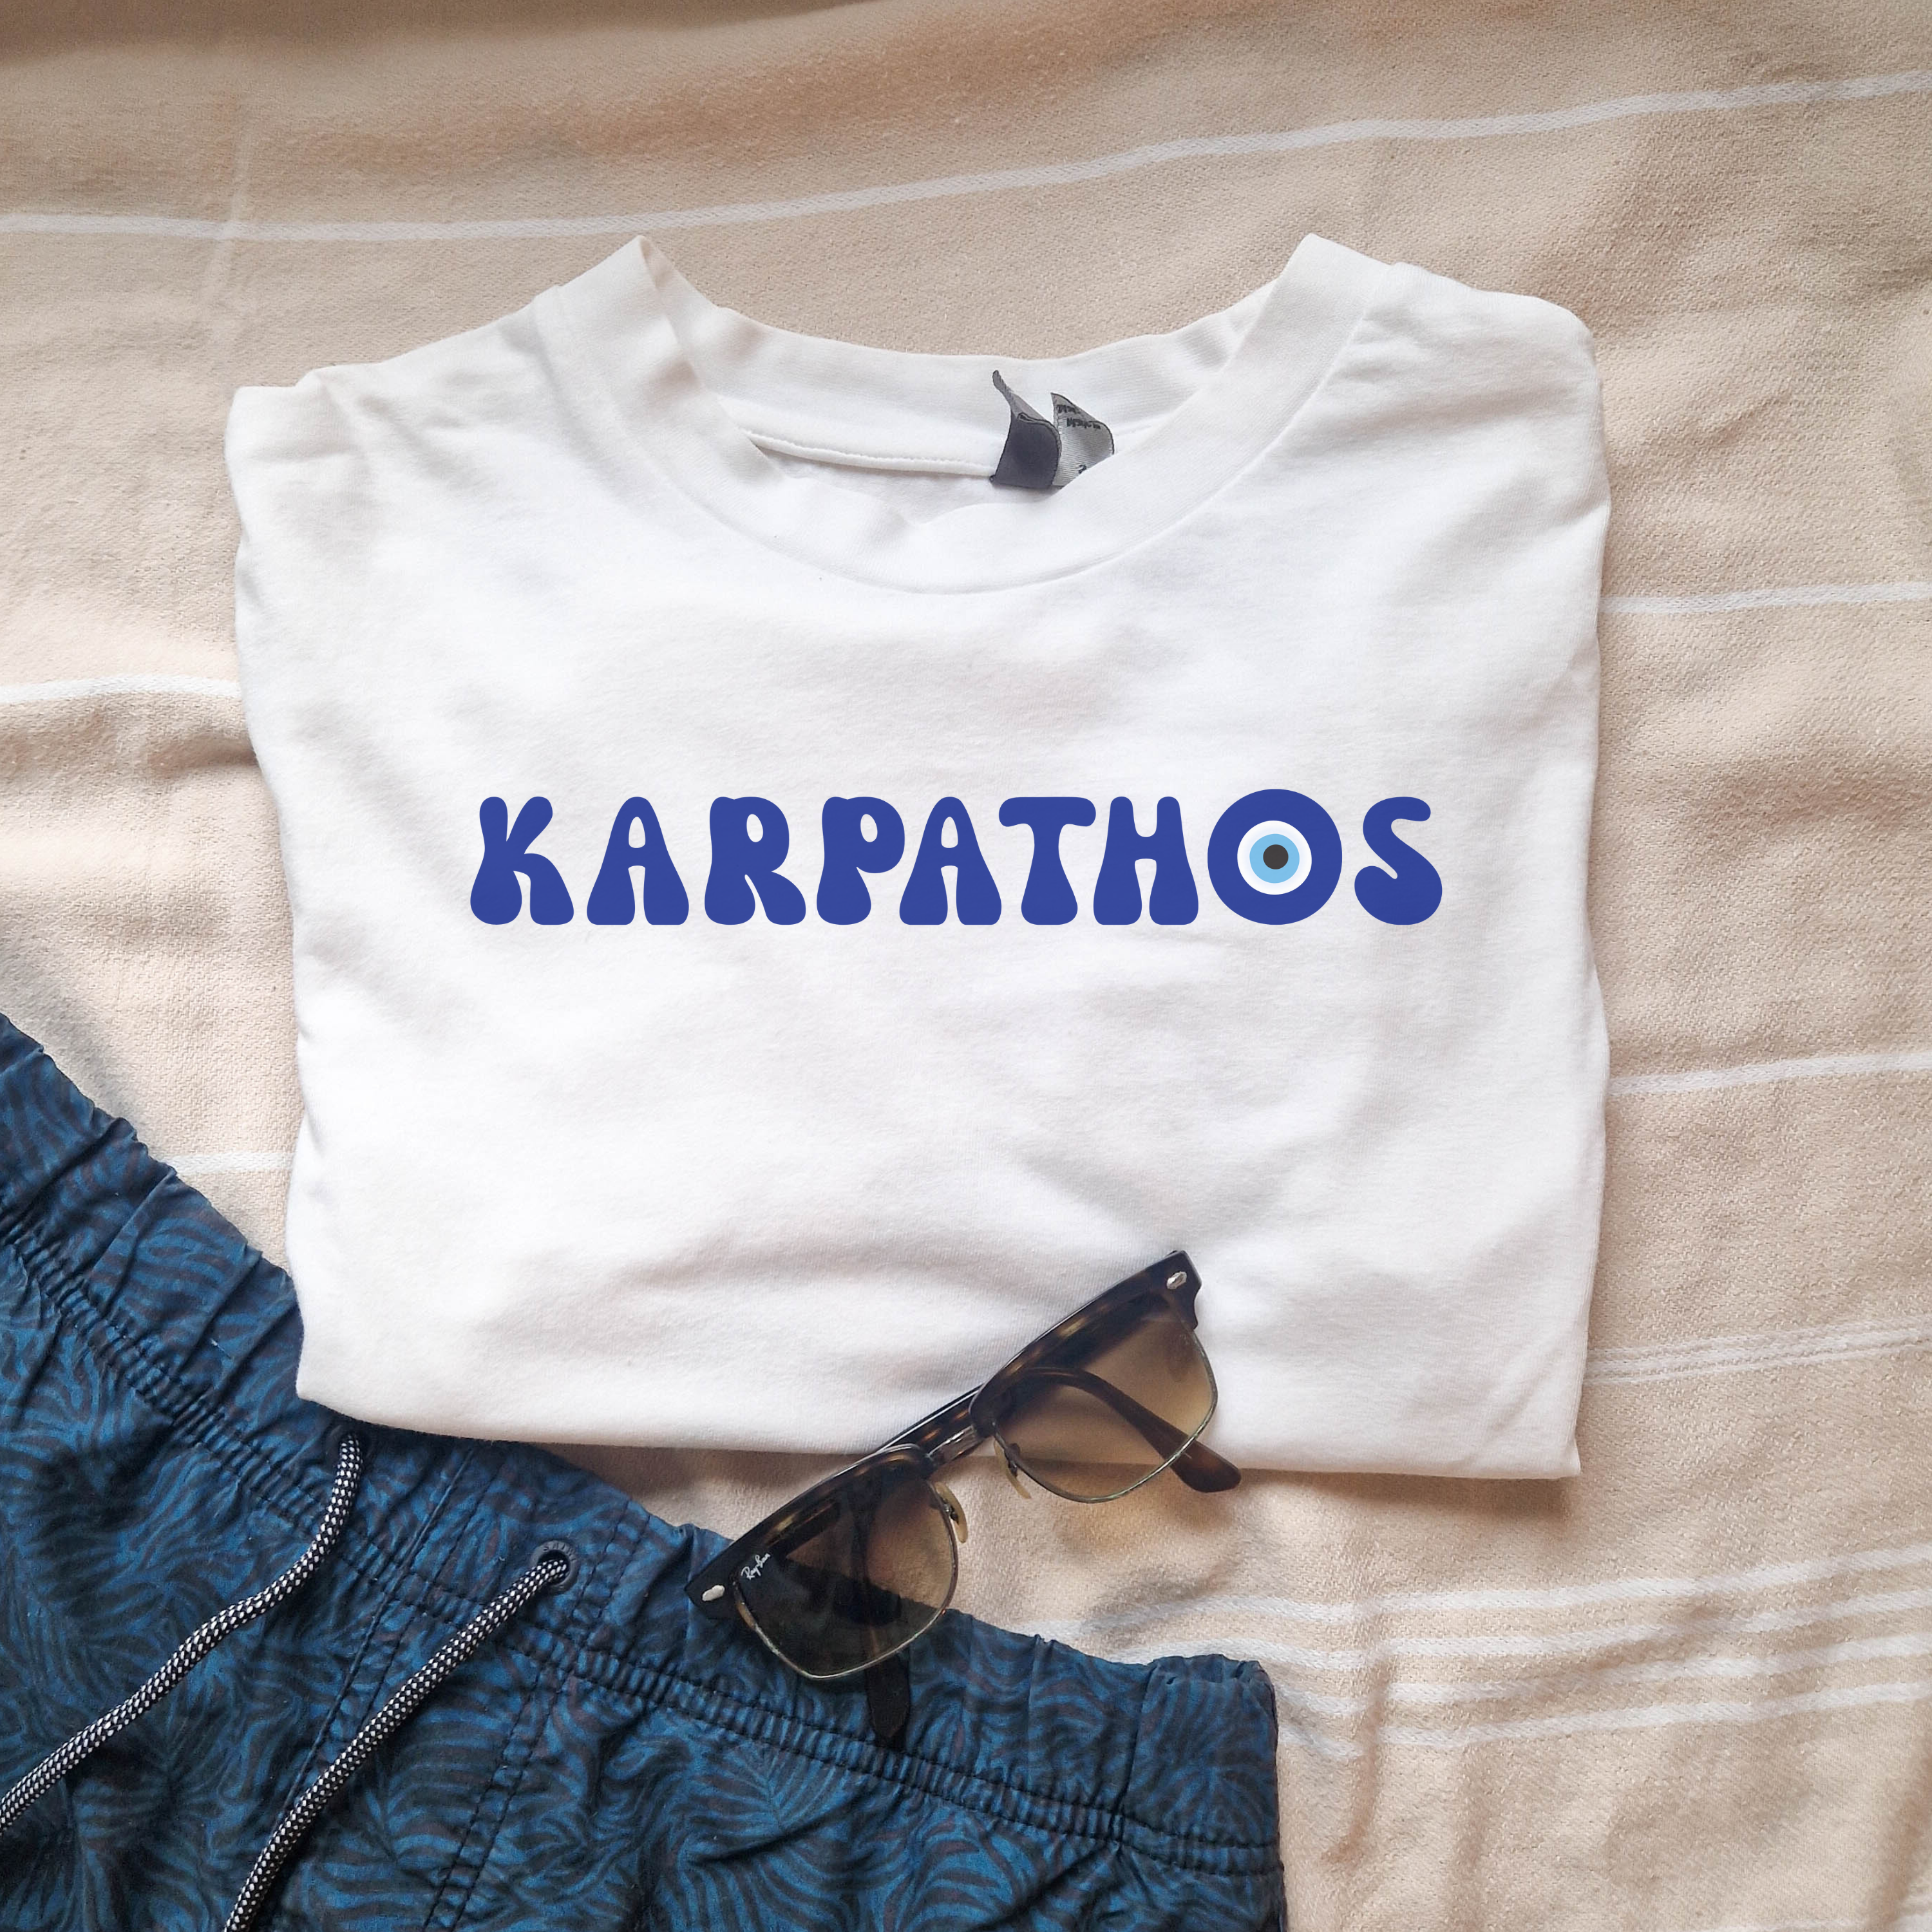 Karpathos shirt Greece travel shirt 1